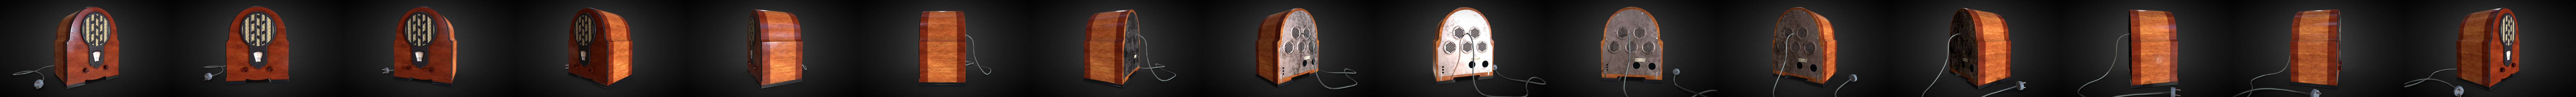 3D model Vintage Philips Radio VR / AR / low-poly